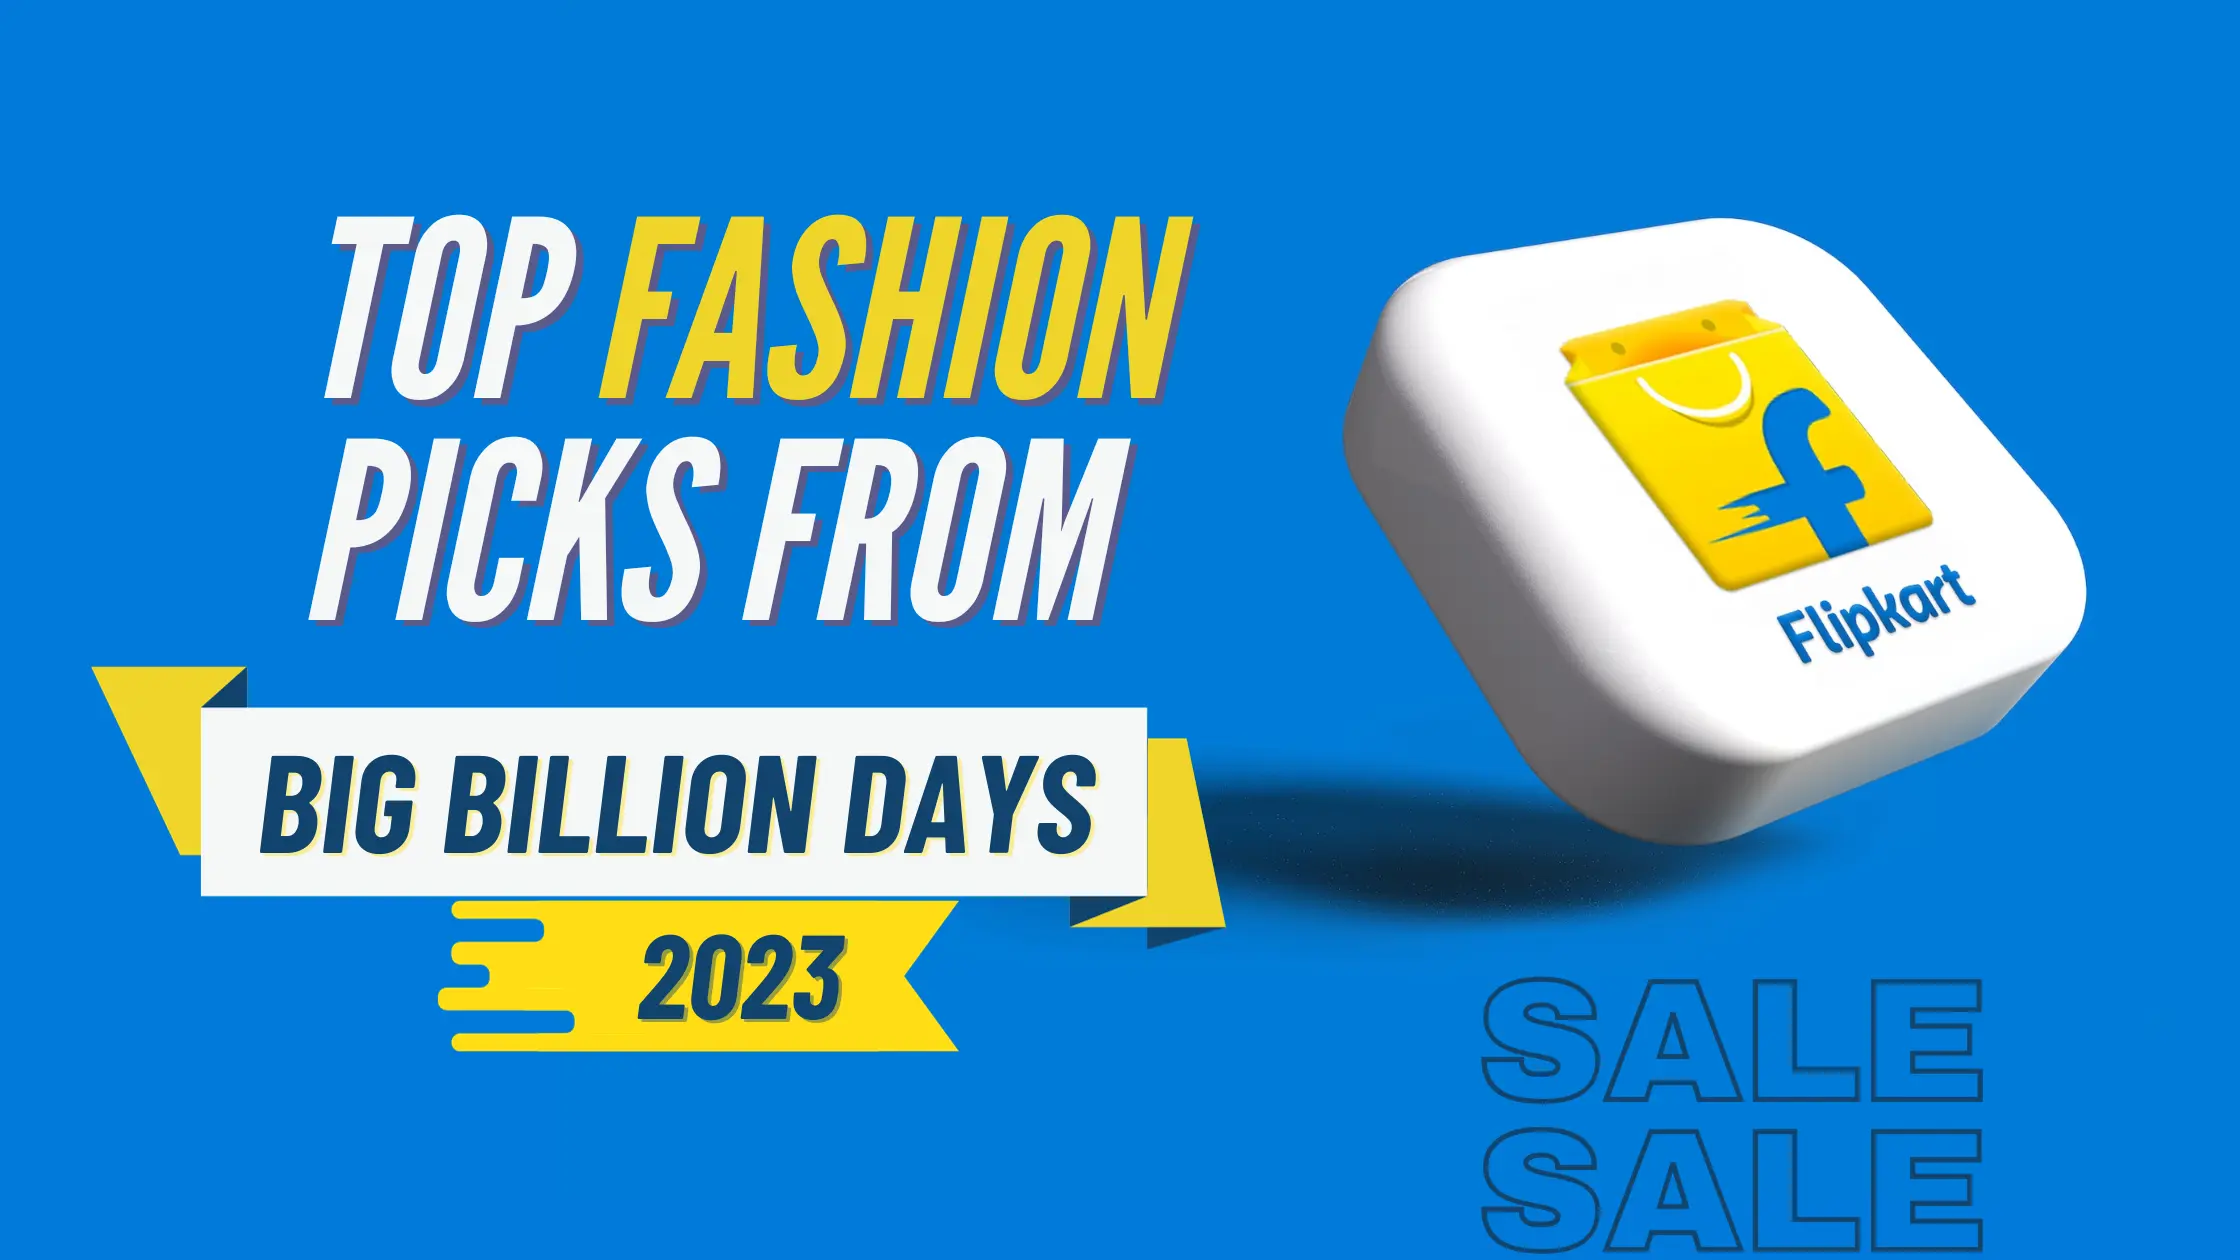 Top Fashion Picks from Flipkart Big Billion Days 2023 You Can’t Miss!